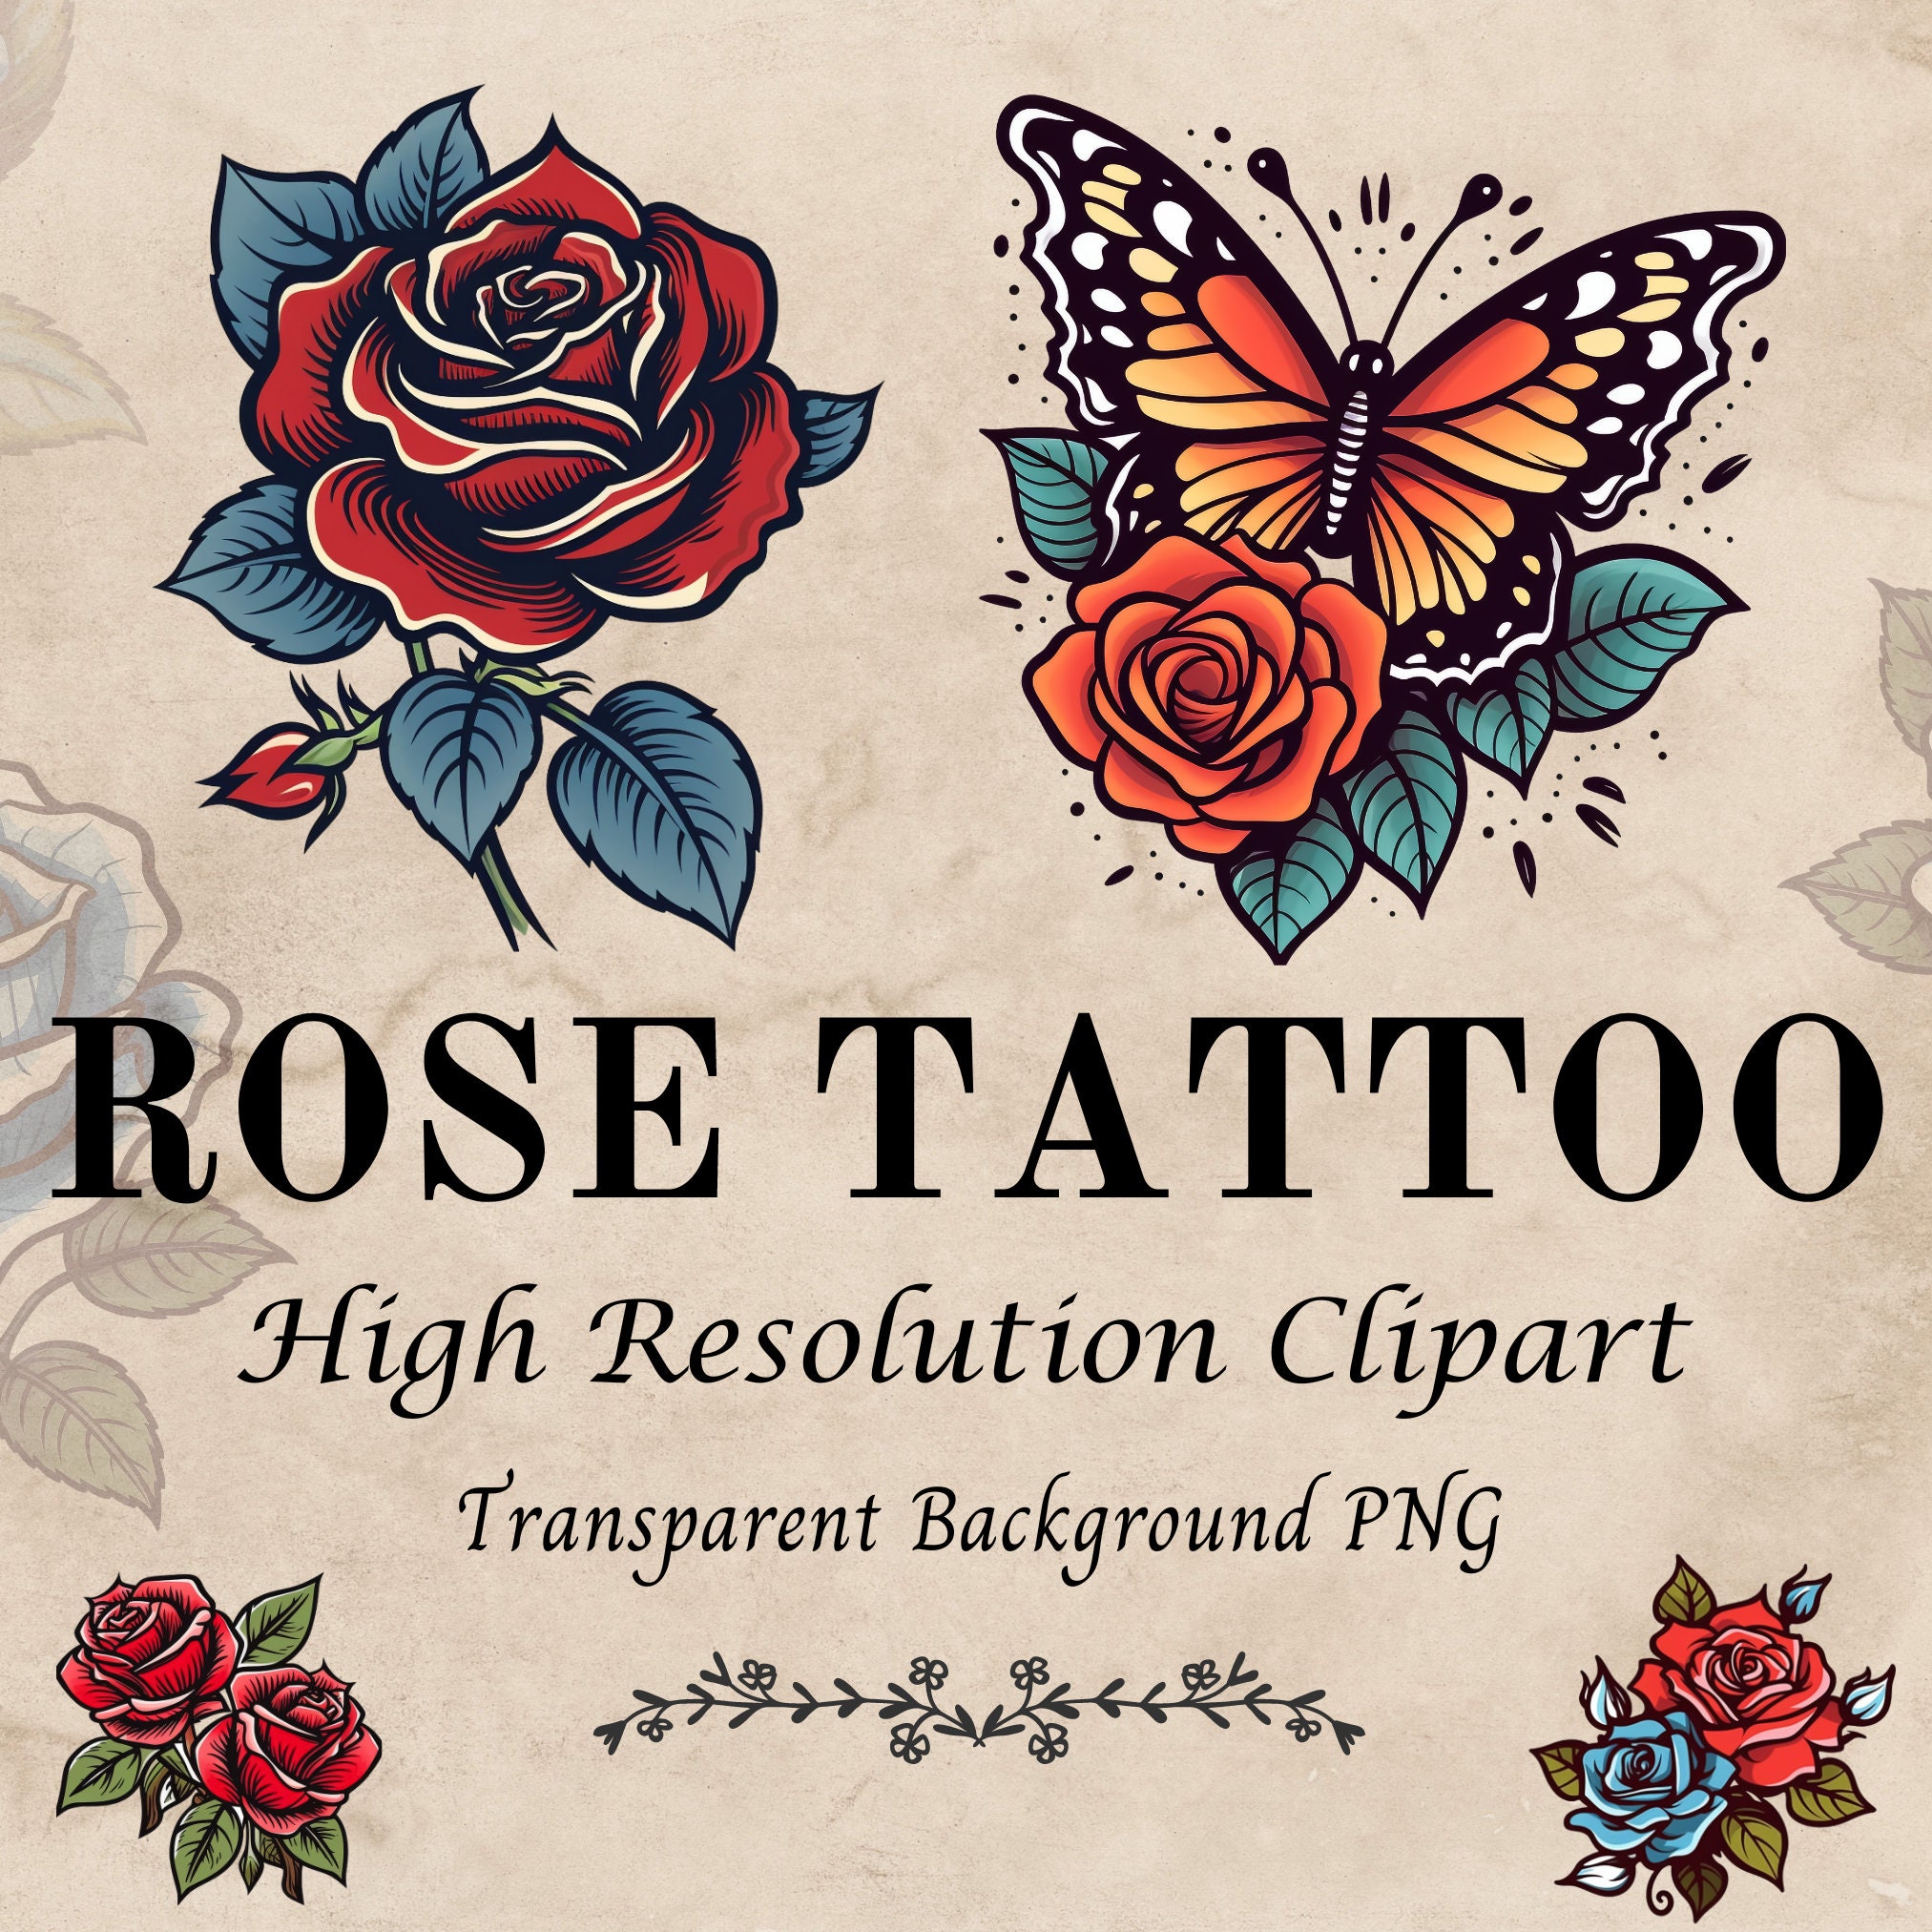 Old School Tattoo Images - Free Download on Freepik